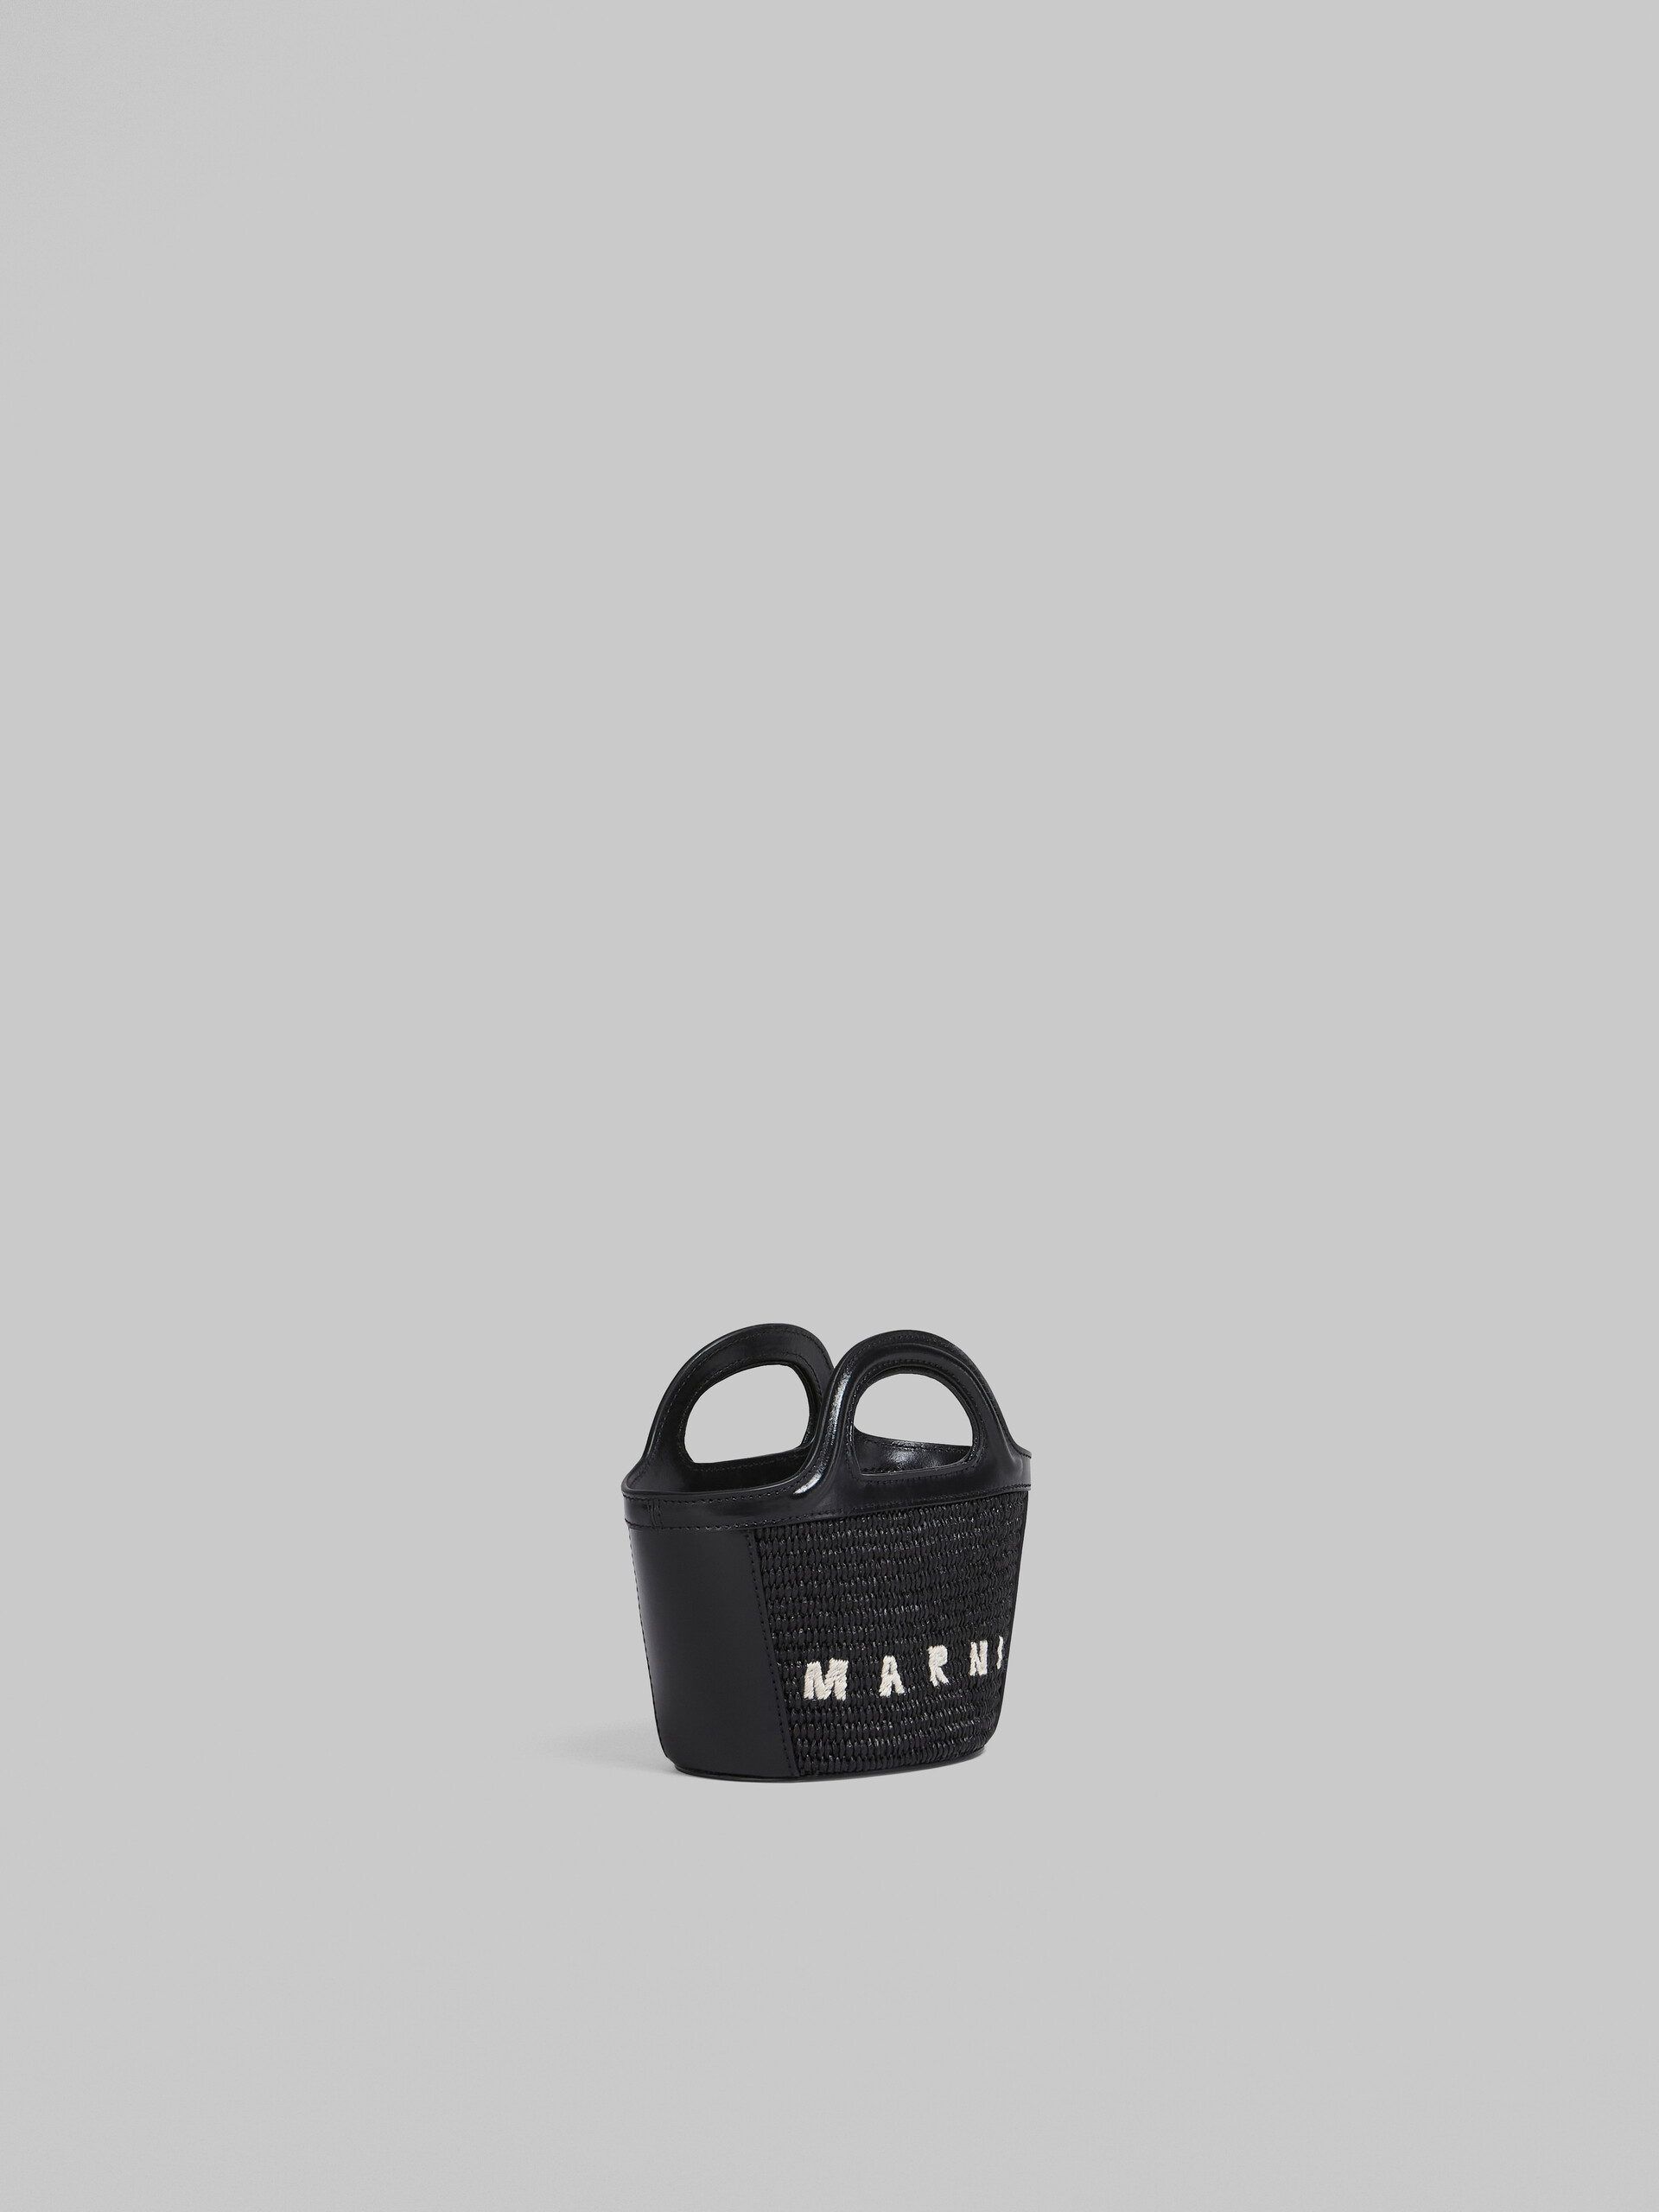 Tropicalia Micro Bag in black leather and raffia - Handbags - Image 6